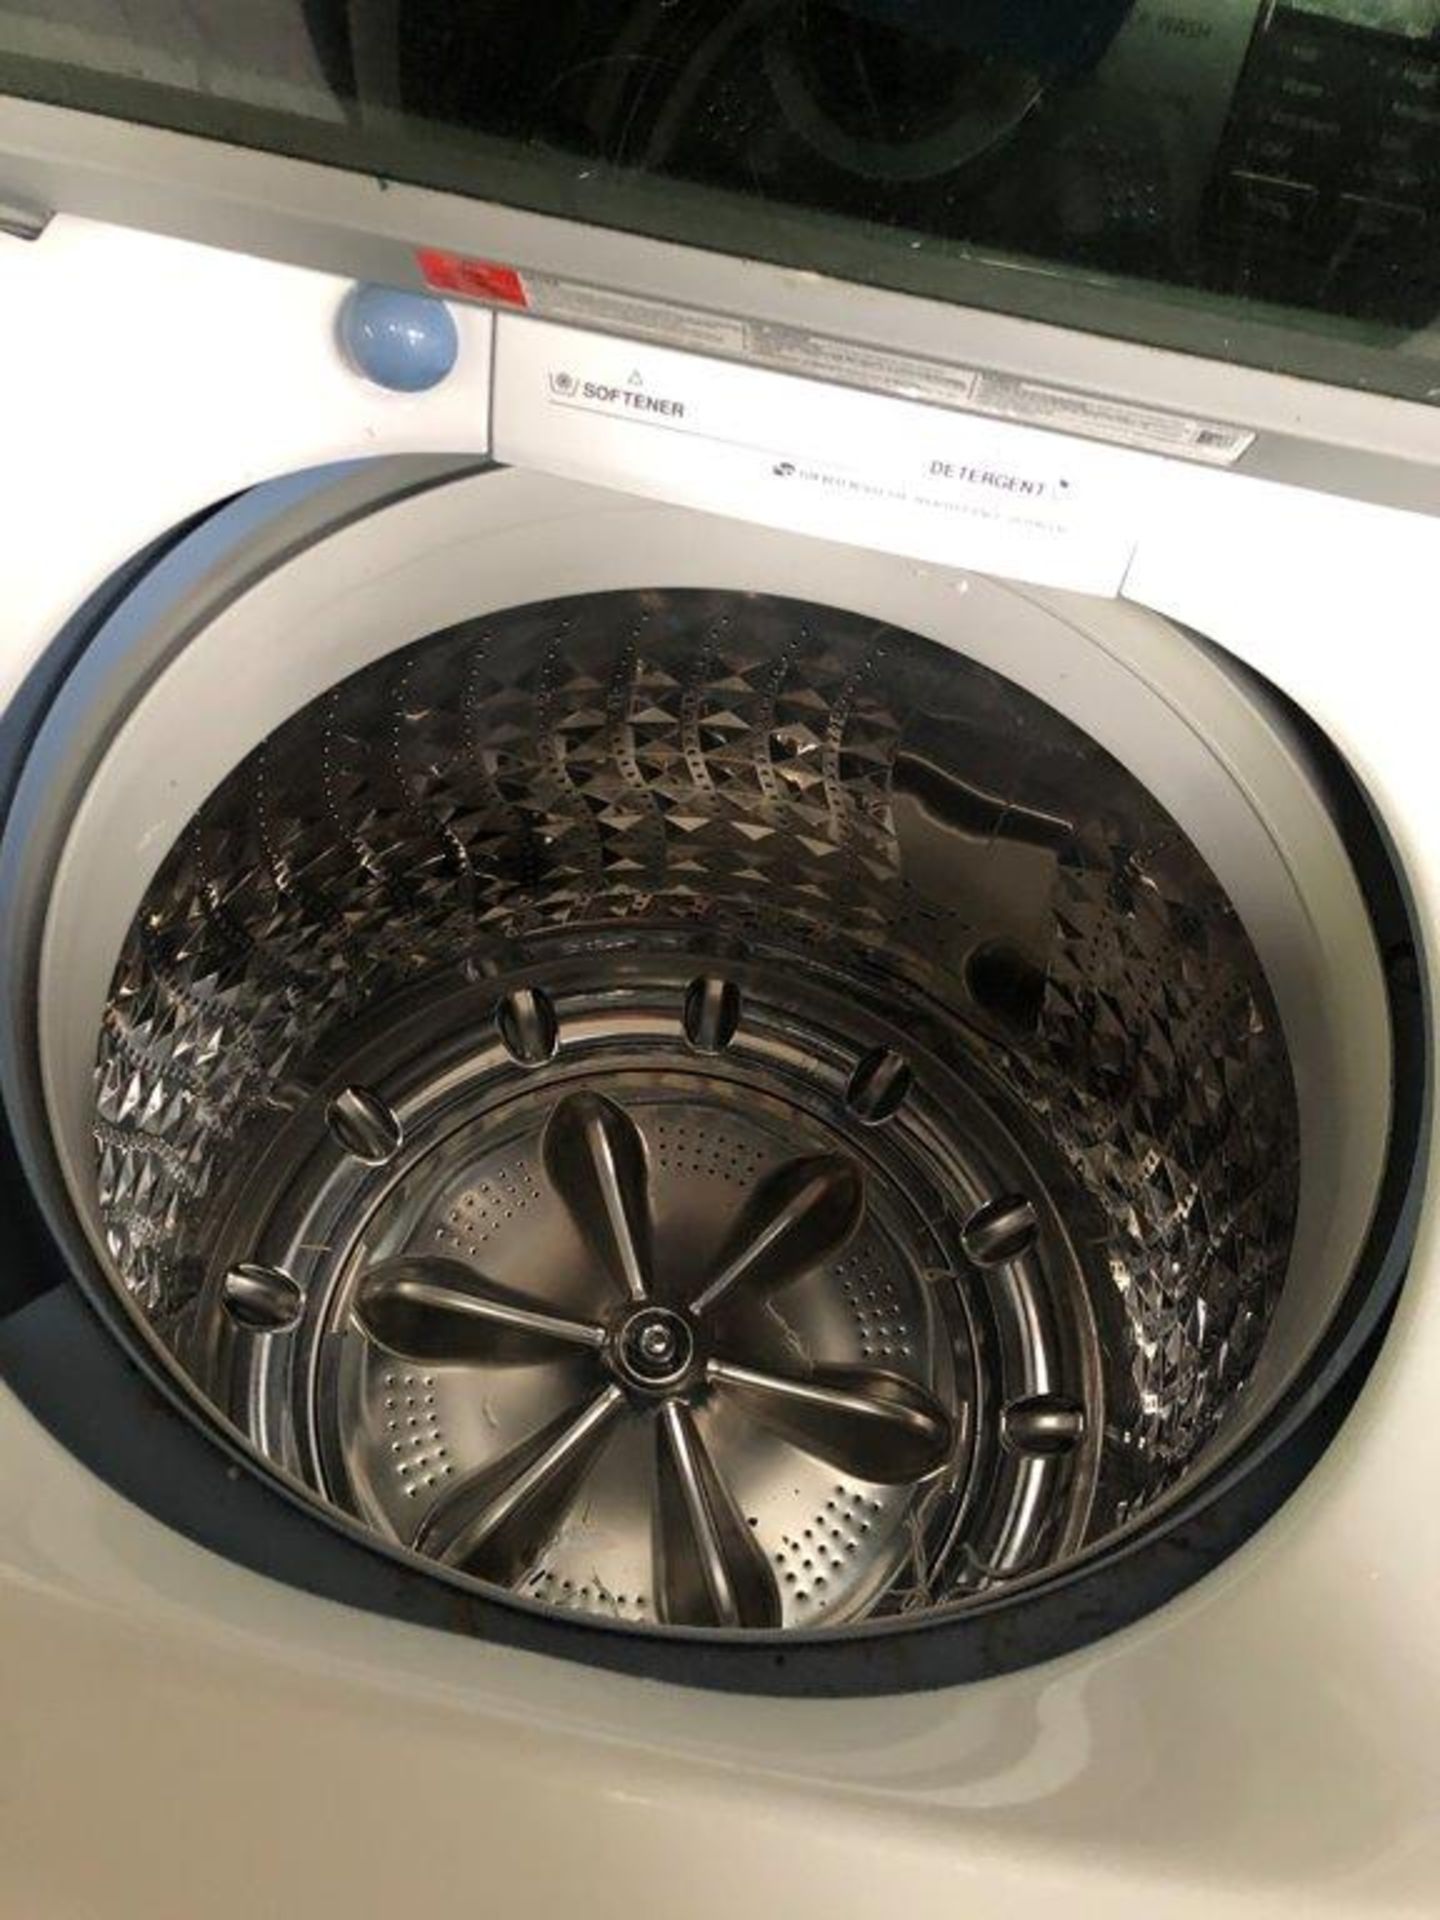 Top Load Samsung High Efficency Washing Machine - Image 4 of 5